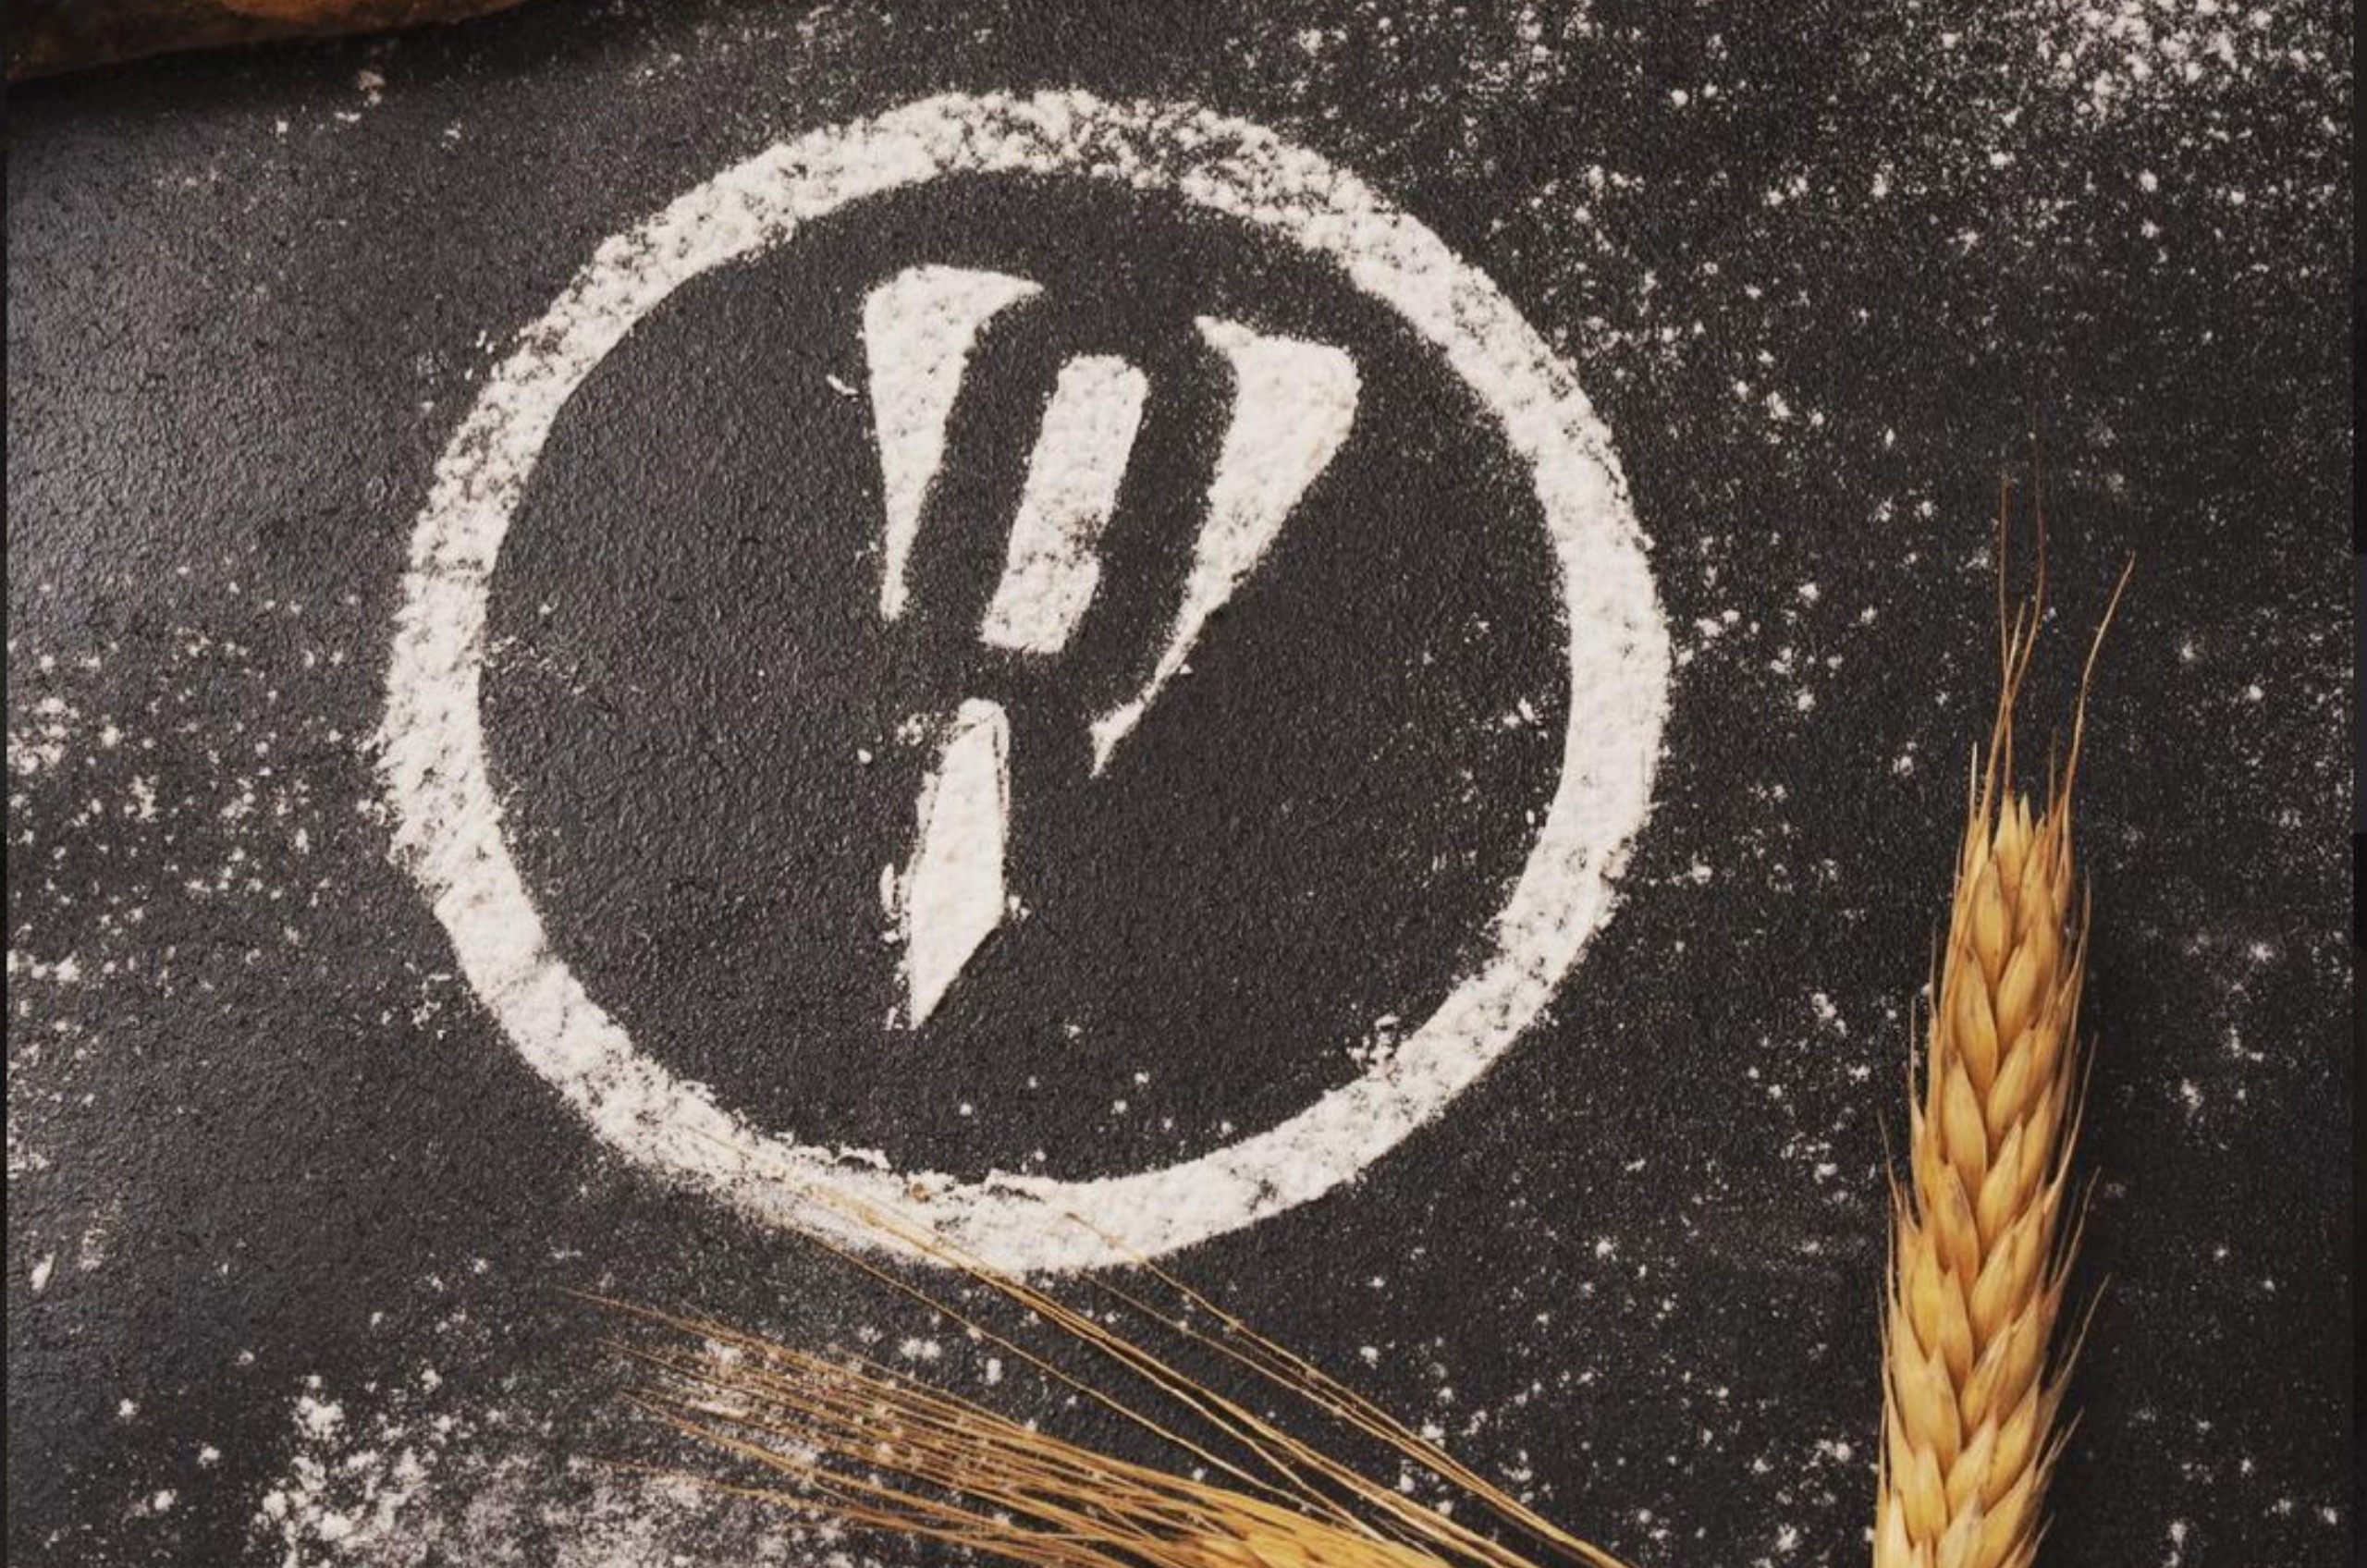 Pizza Rubato company logo made of white flour near a stalk of wheat on a black background